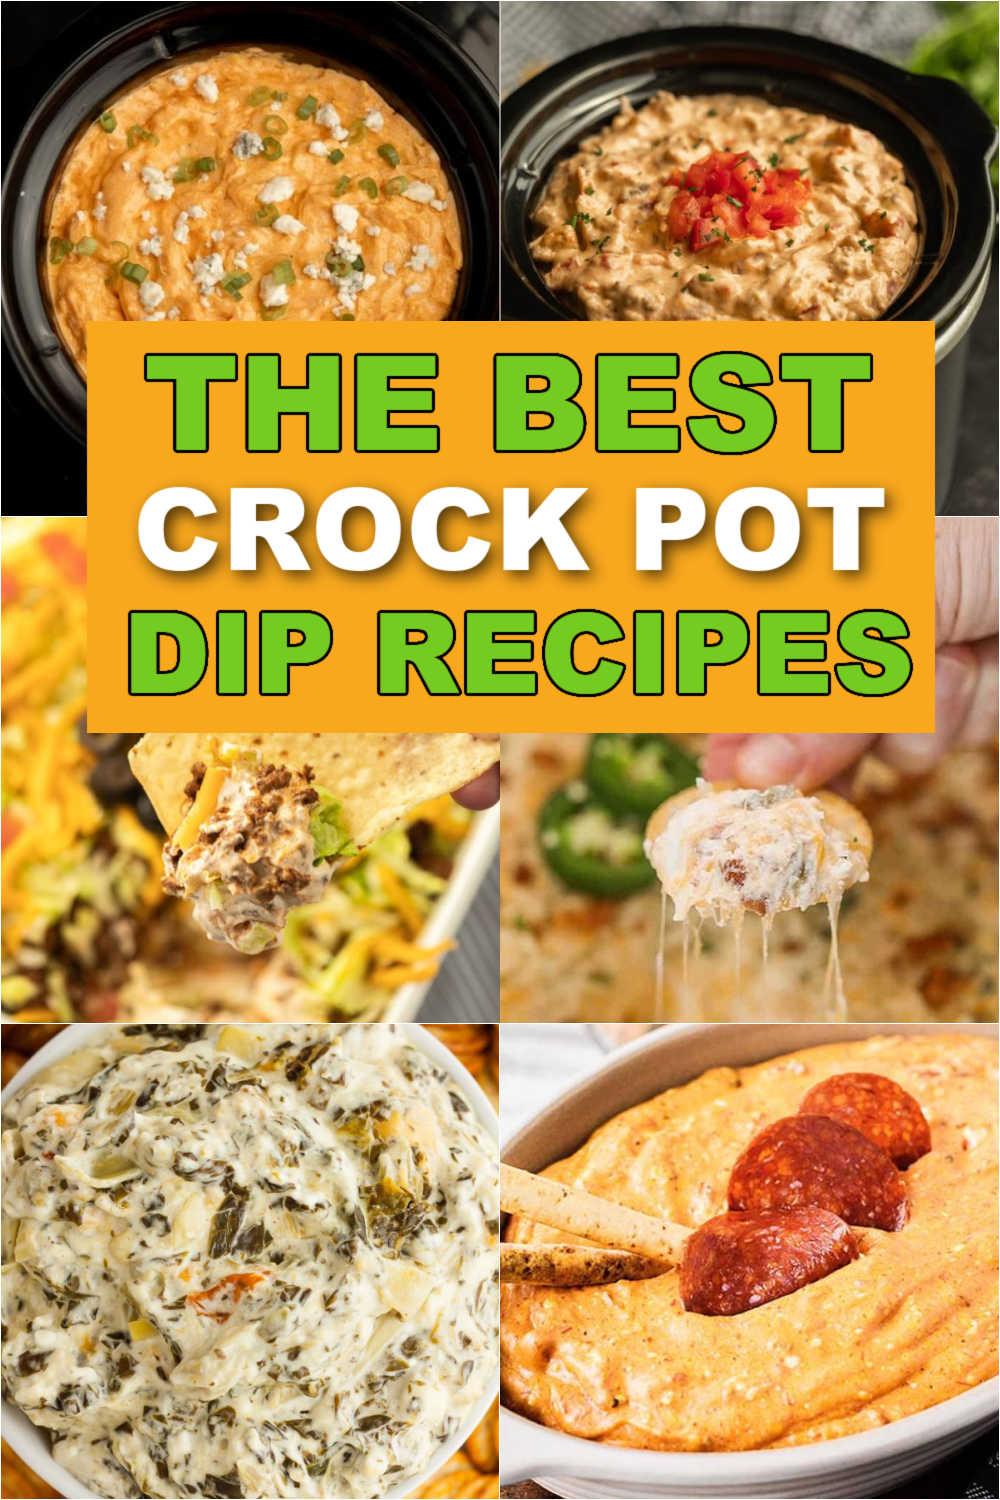 Crock Pot Dips - 25 Hot Crock Pot Dip Recipes